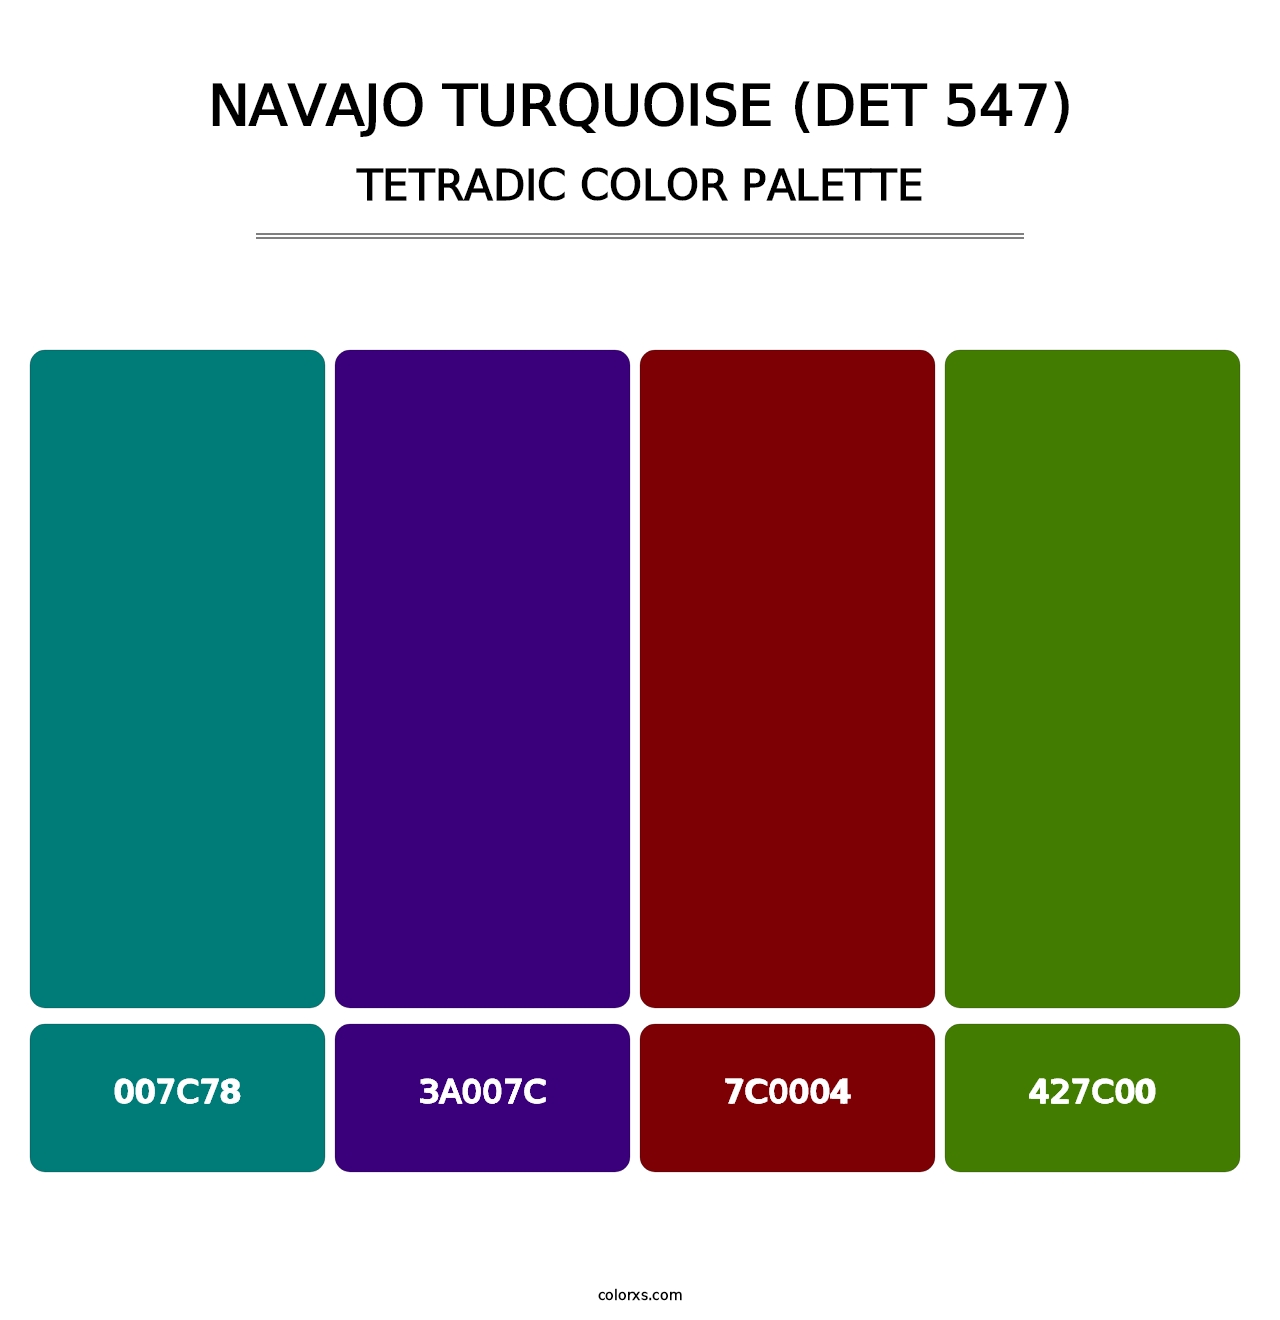 Navajo Turquoise (DET 547) - Tetradic Color Palette